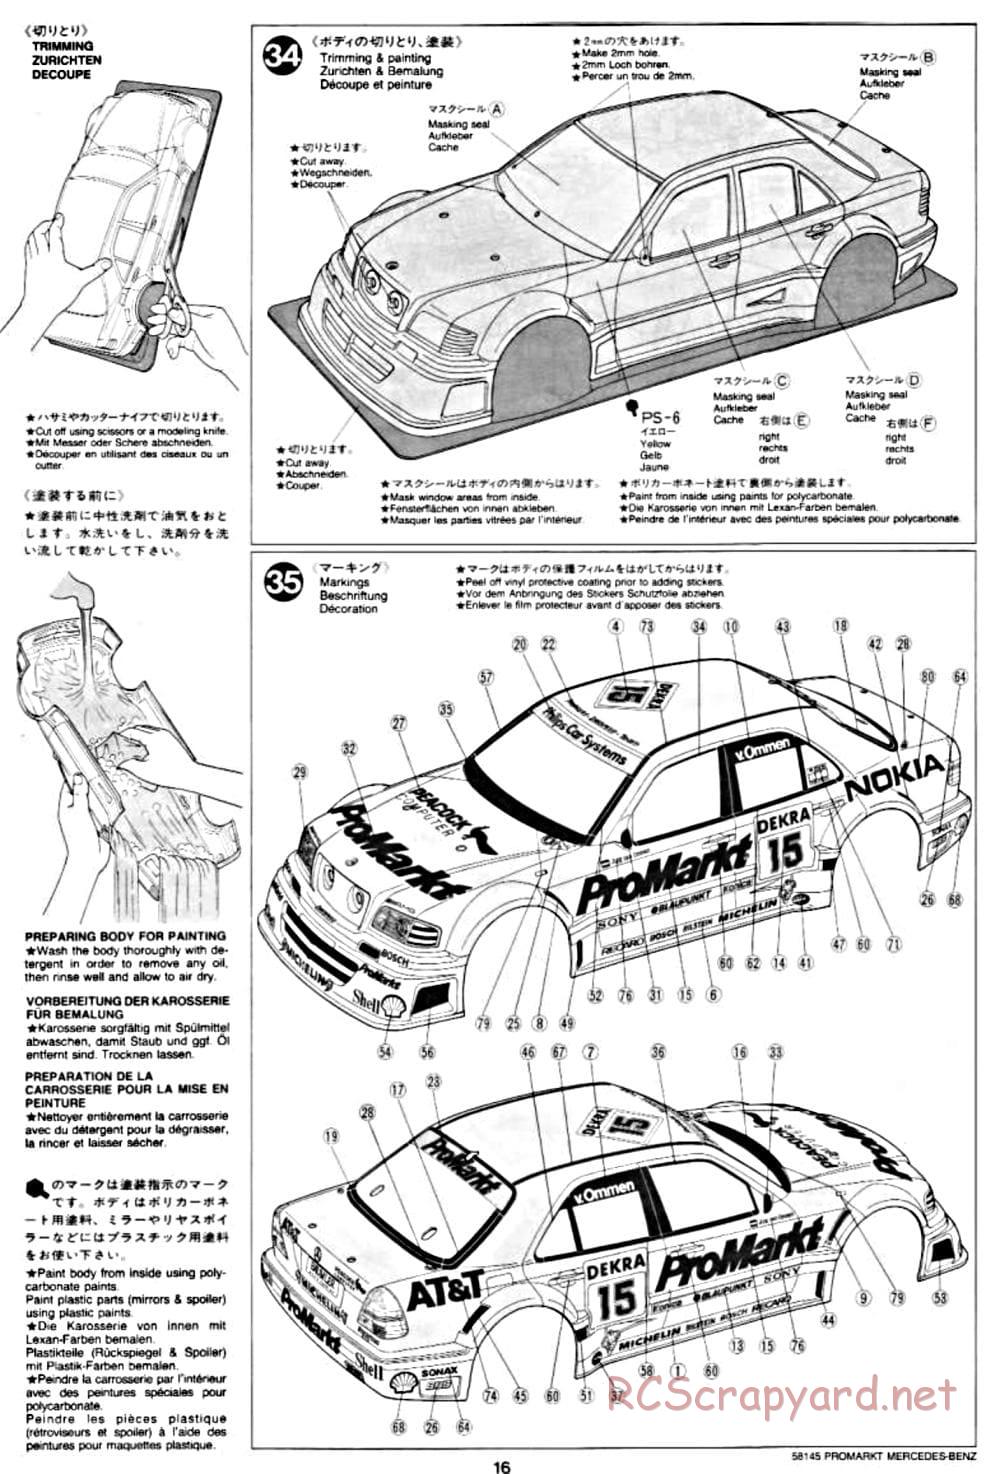 Tamiya - ProMarkt-Zakspeed AMG Mercedes C-Class DTM - TA-02 Chassis - Manual - Page 16